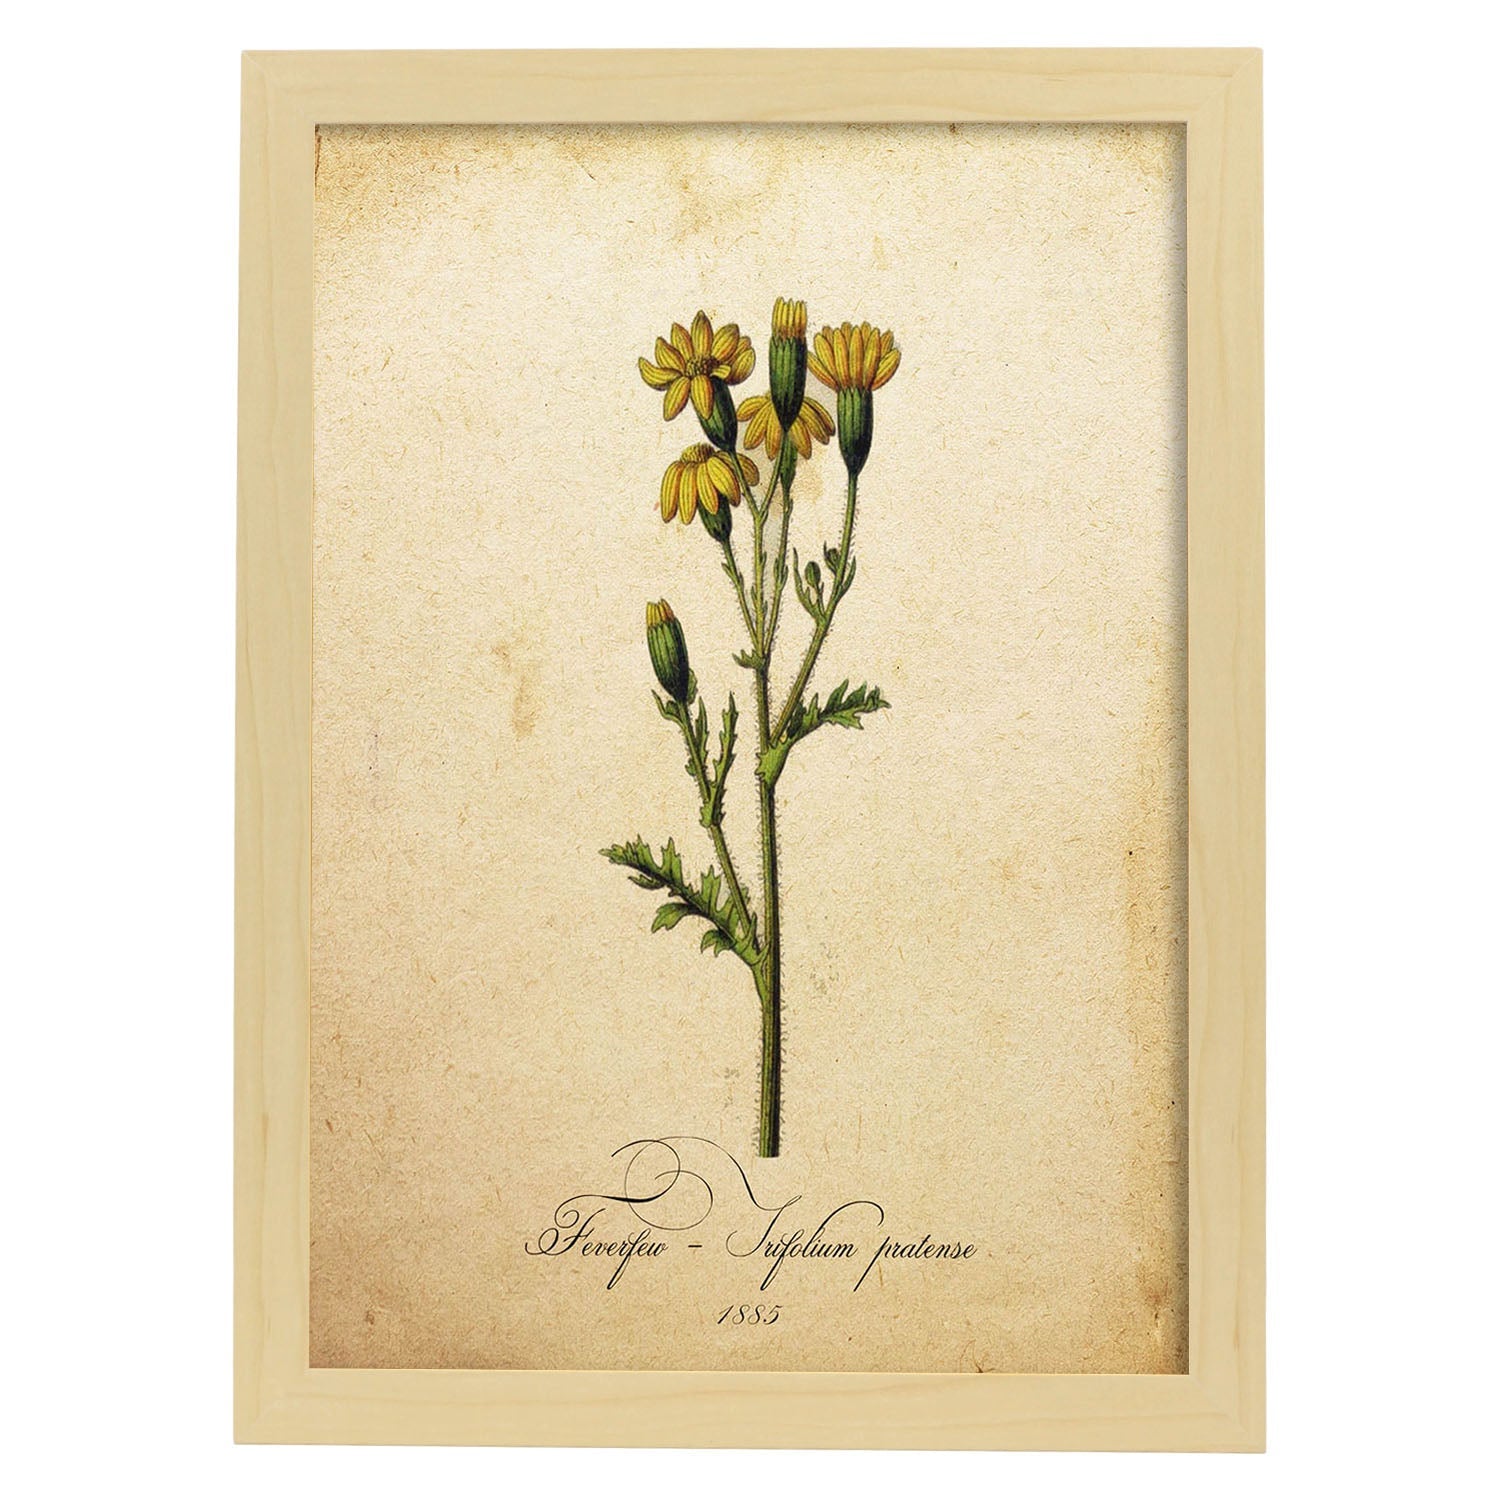 Poster de flores vintage. Lámina Trifolium pratense con diseño vintage.-Artwork-Nacnic-A4-Marco Madera clara-Nacnic Estudio SL